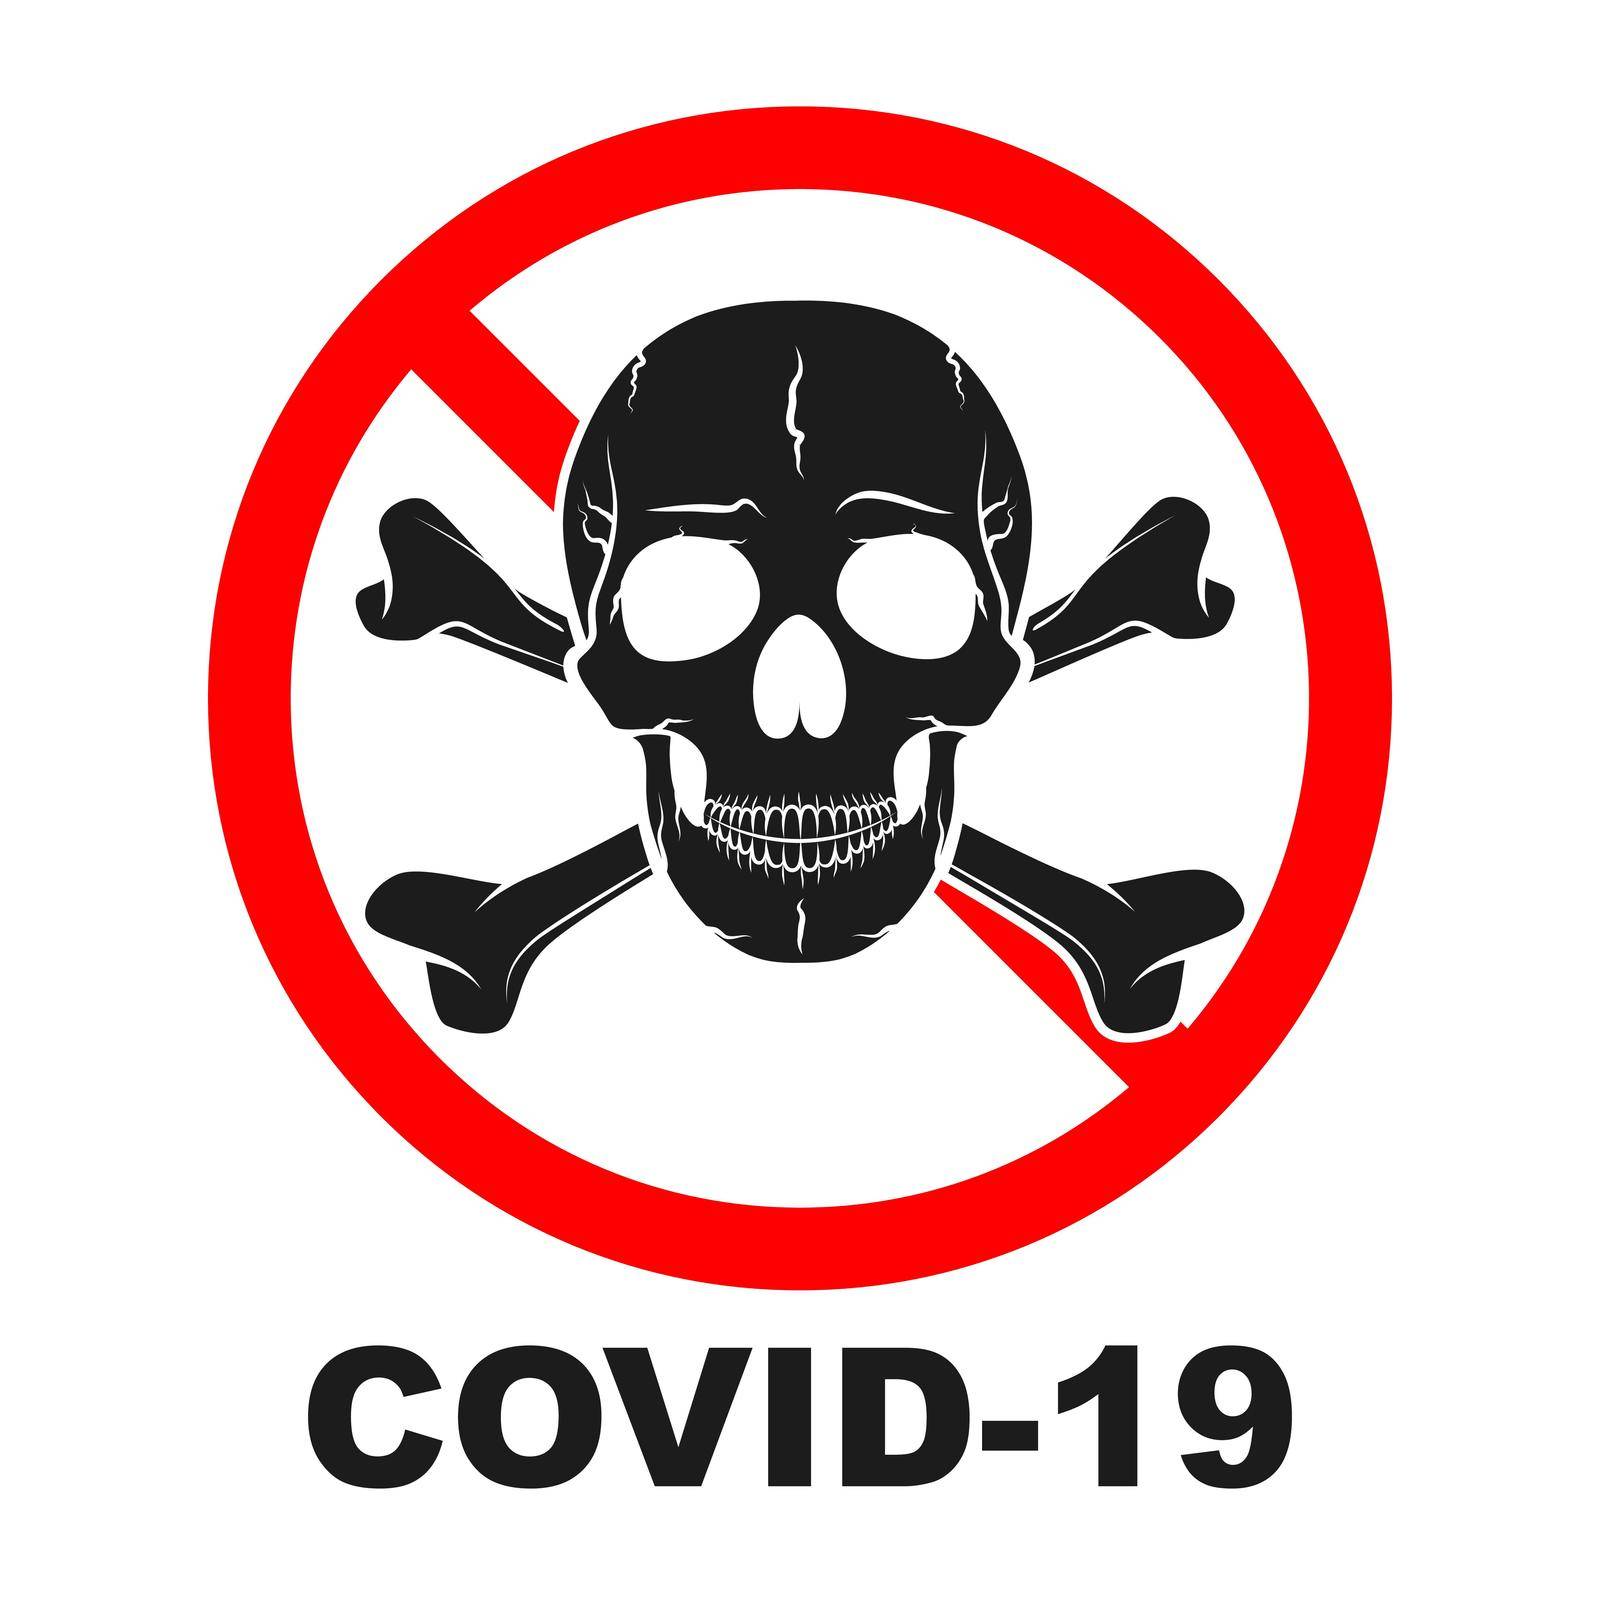 No covid-19 warning symbol. Stop coronavirus red sign with skull. Vector illustration. Epidemic coronavirus concept.